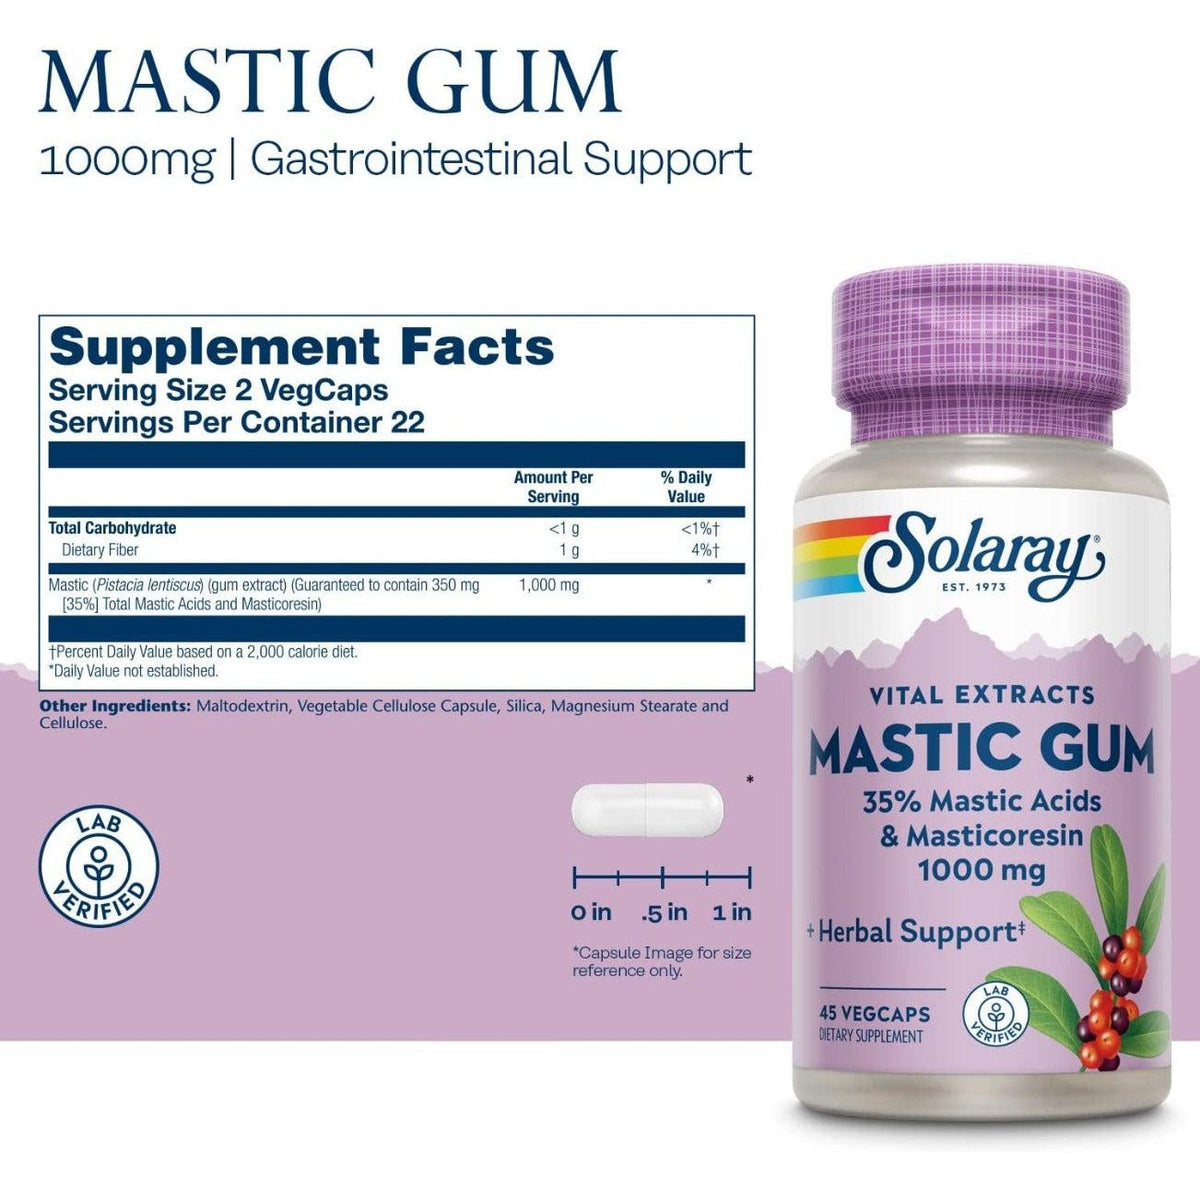 Solaray Mastic Gum Extract 1000mg 45 Vegetable Capsules